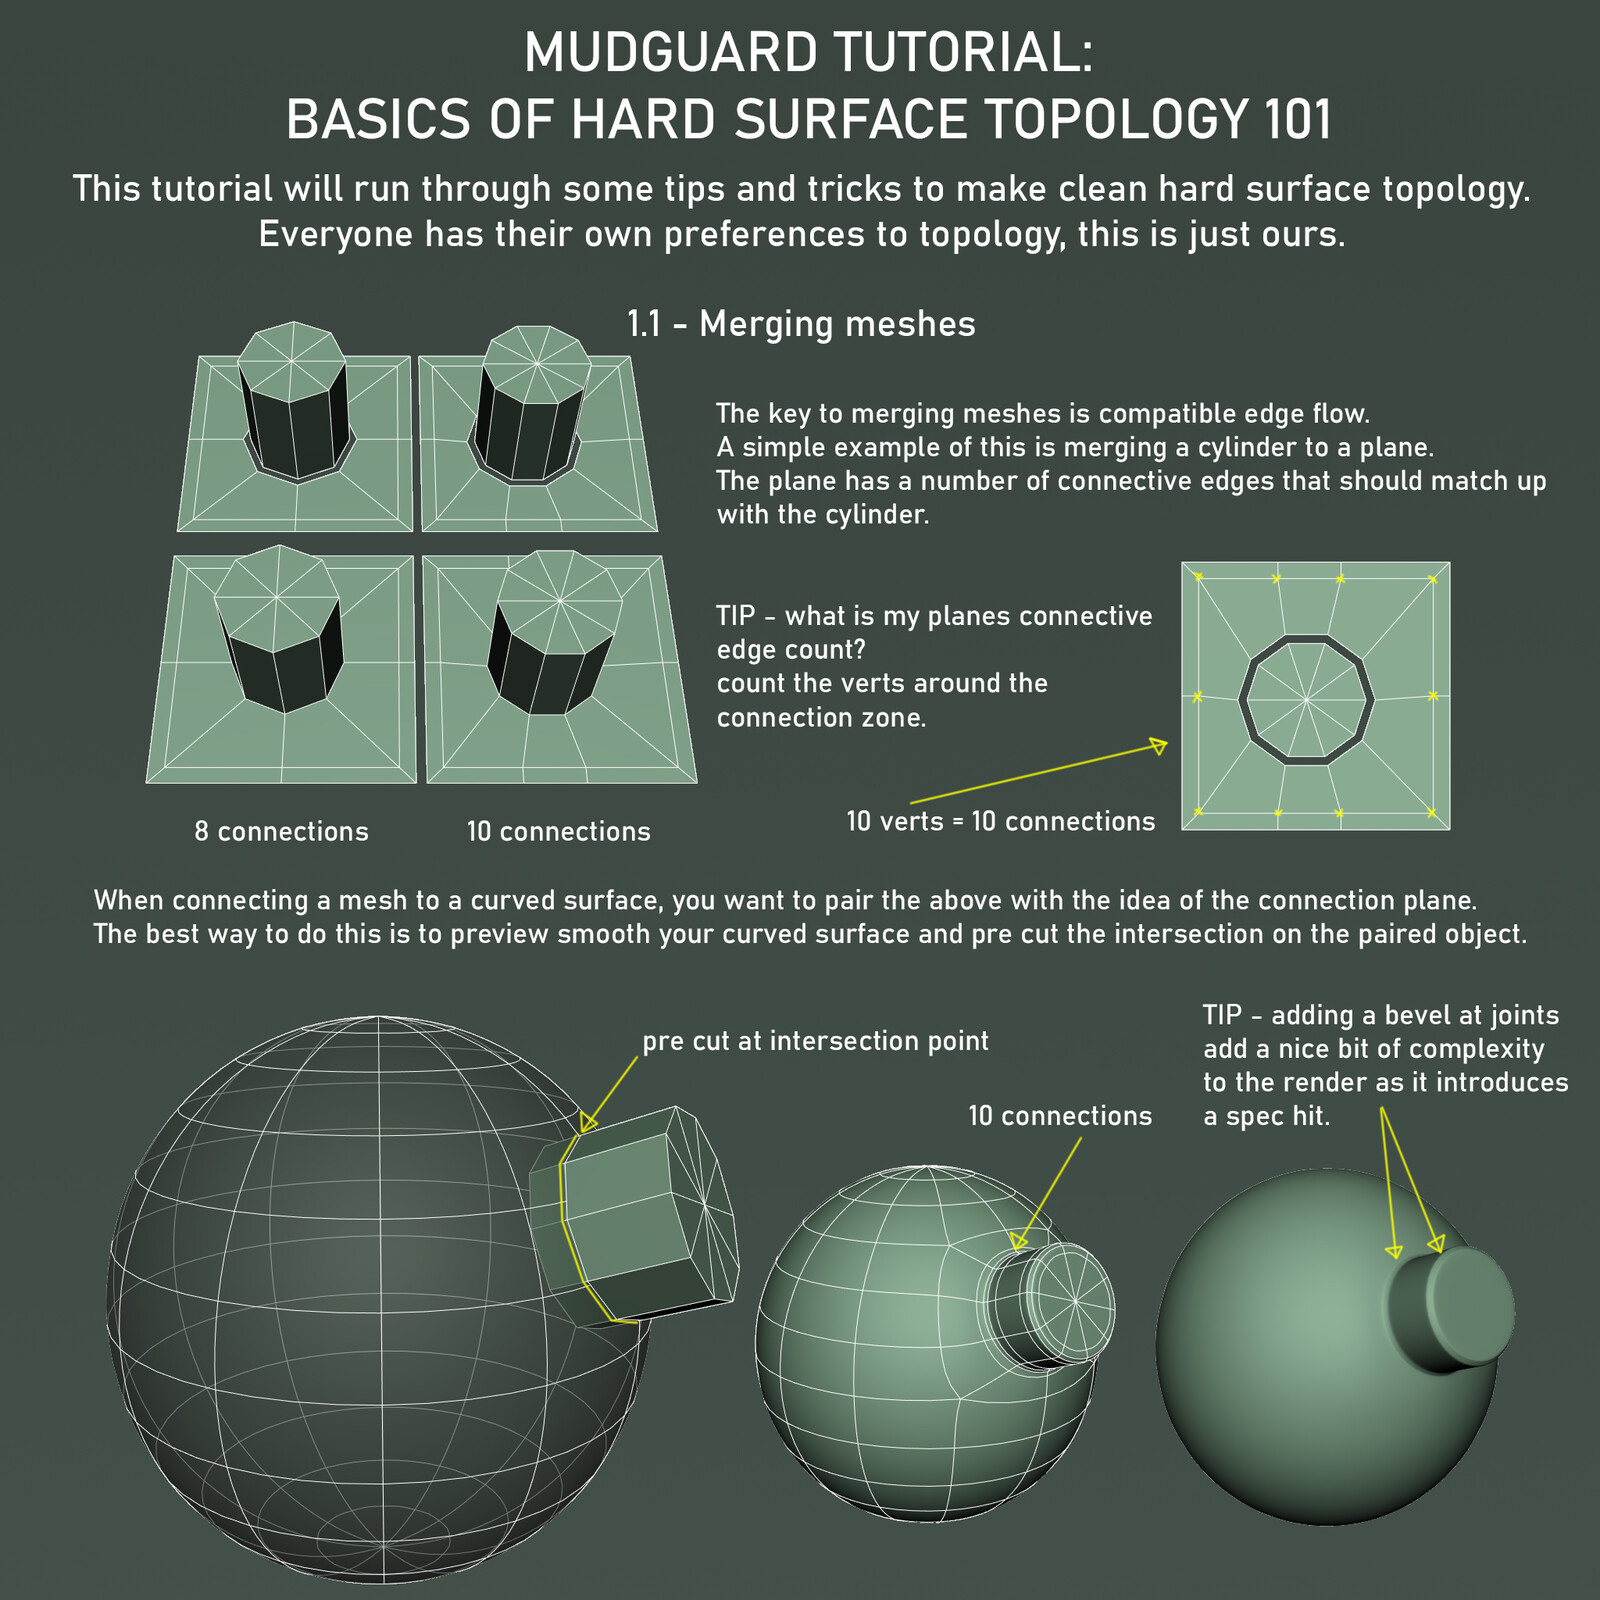 MUDGUARD TUTORIAL: BASICS OF HARD SURFACE TOPOLOGY 101